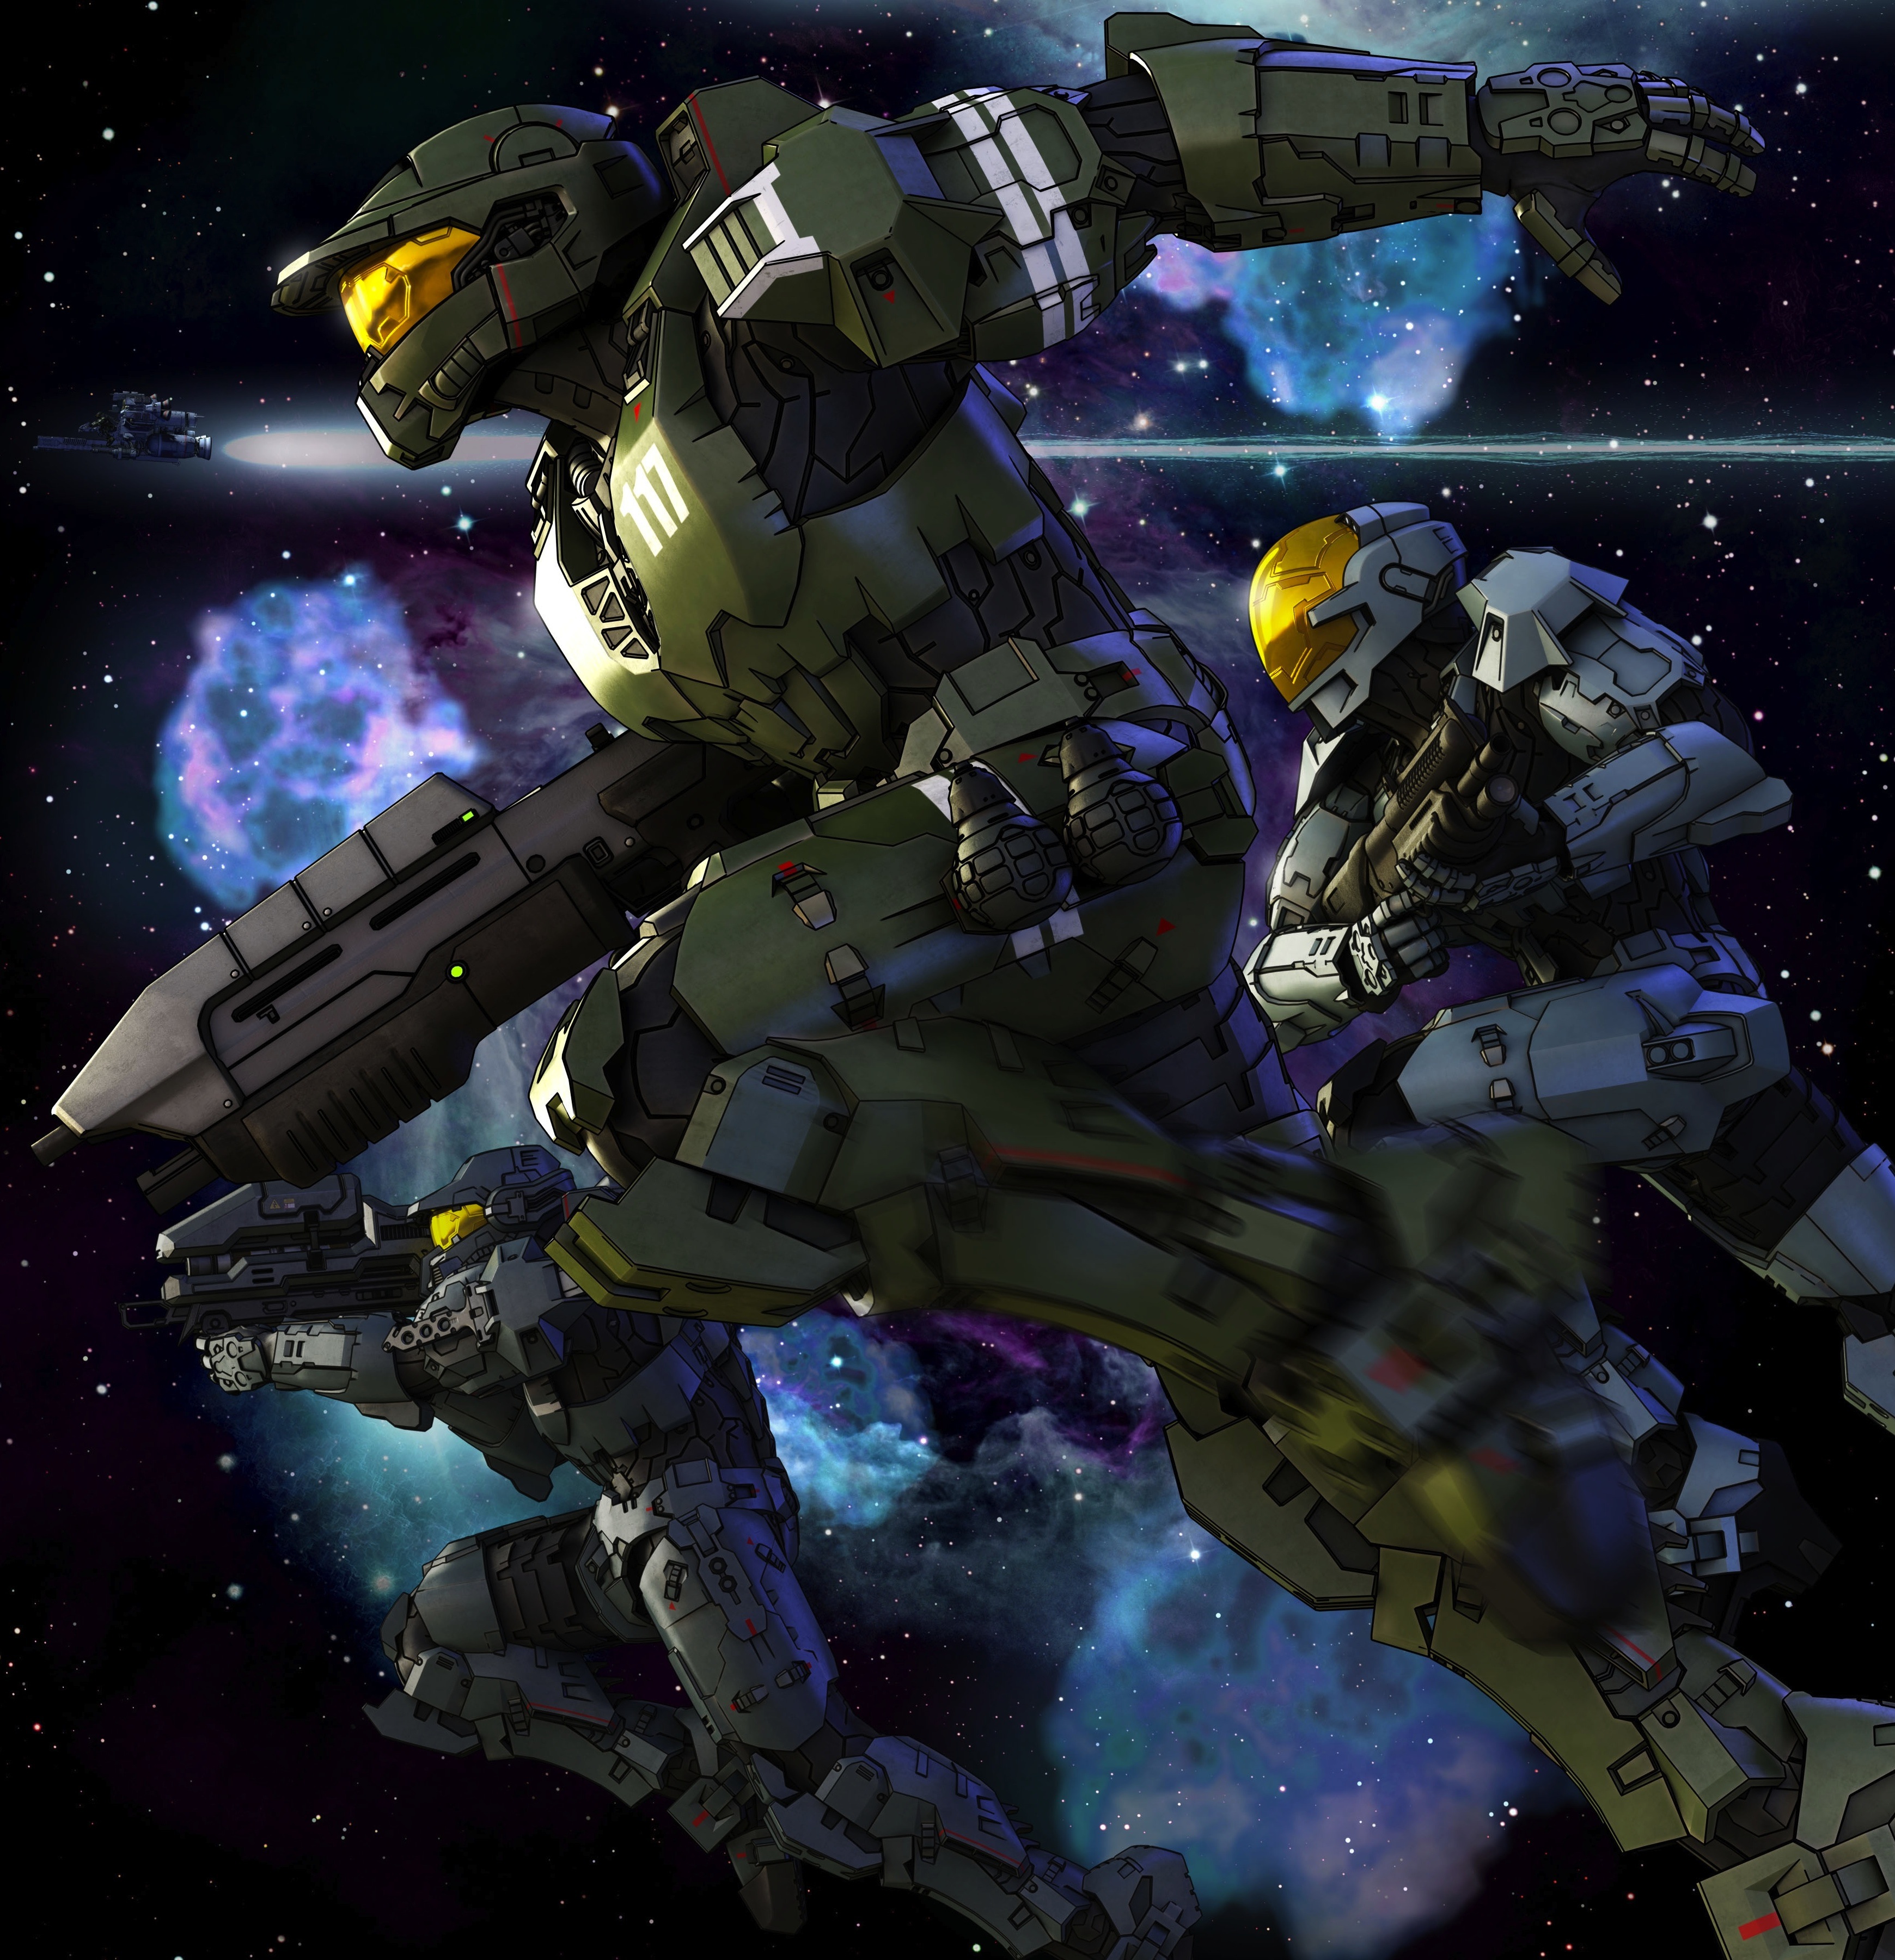 Halo 5 Blue Team Wallpaper - WallpaperSafari